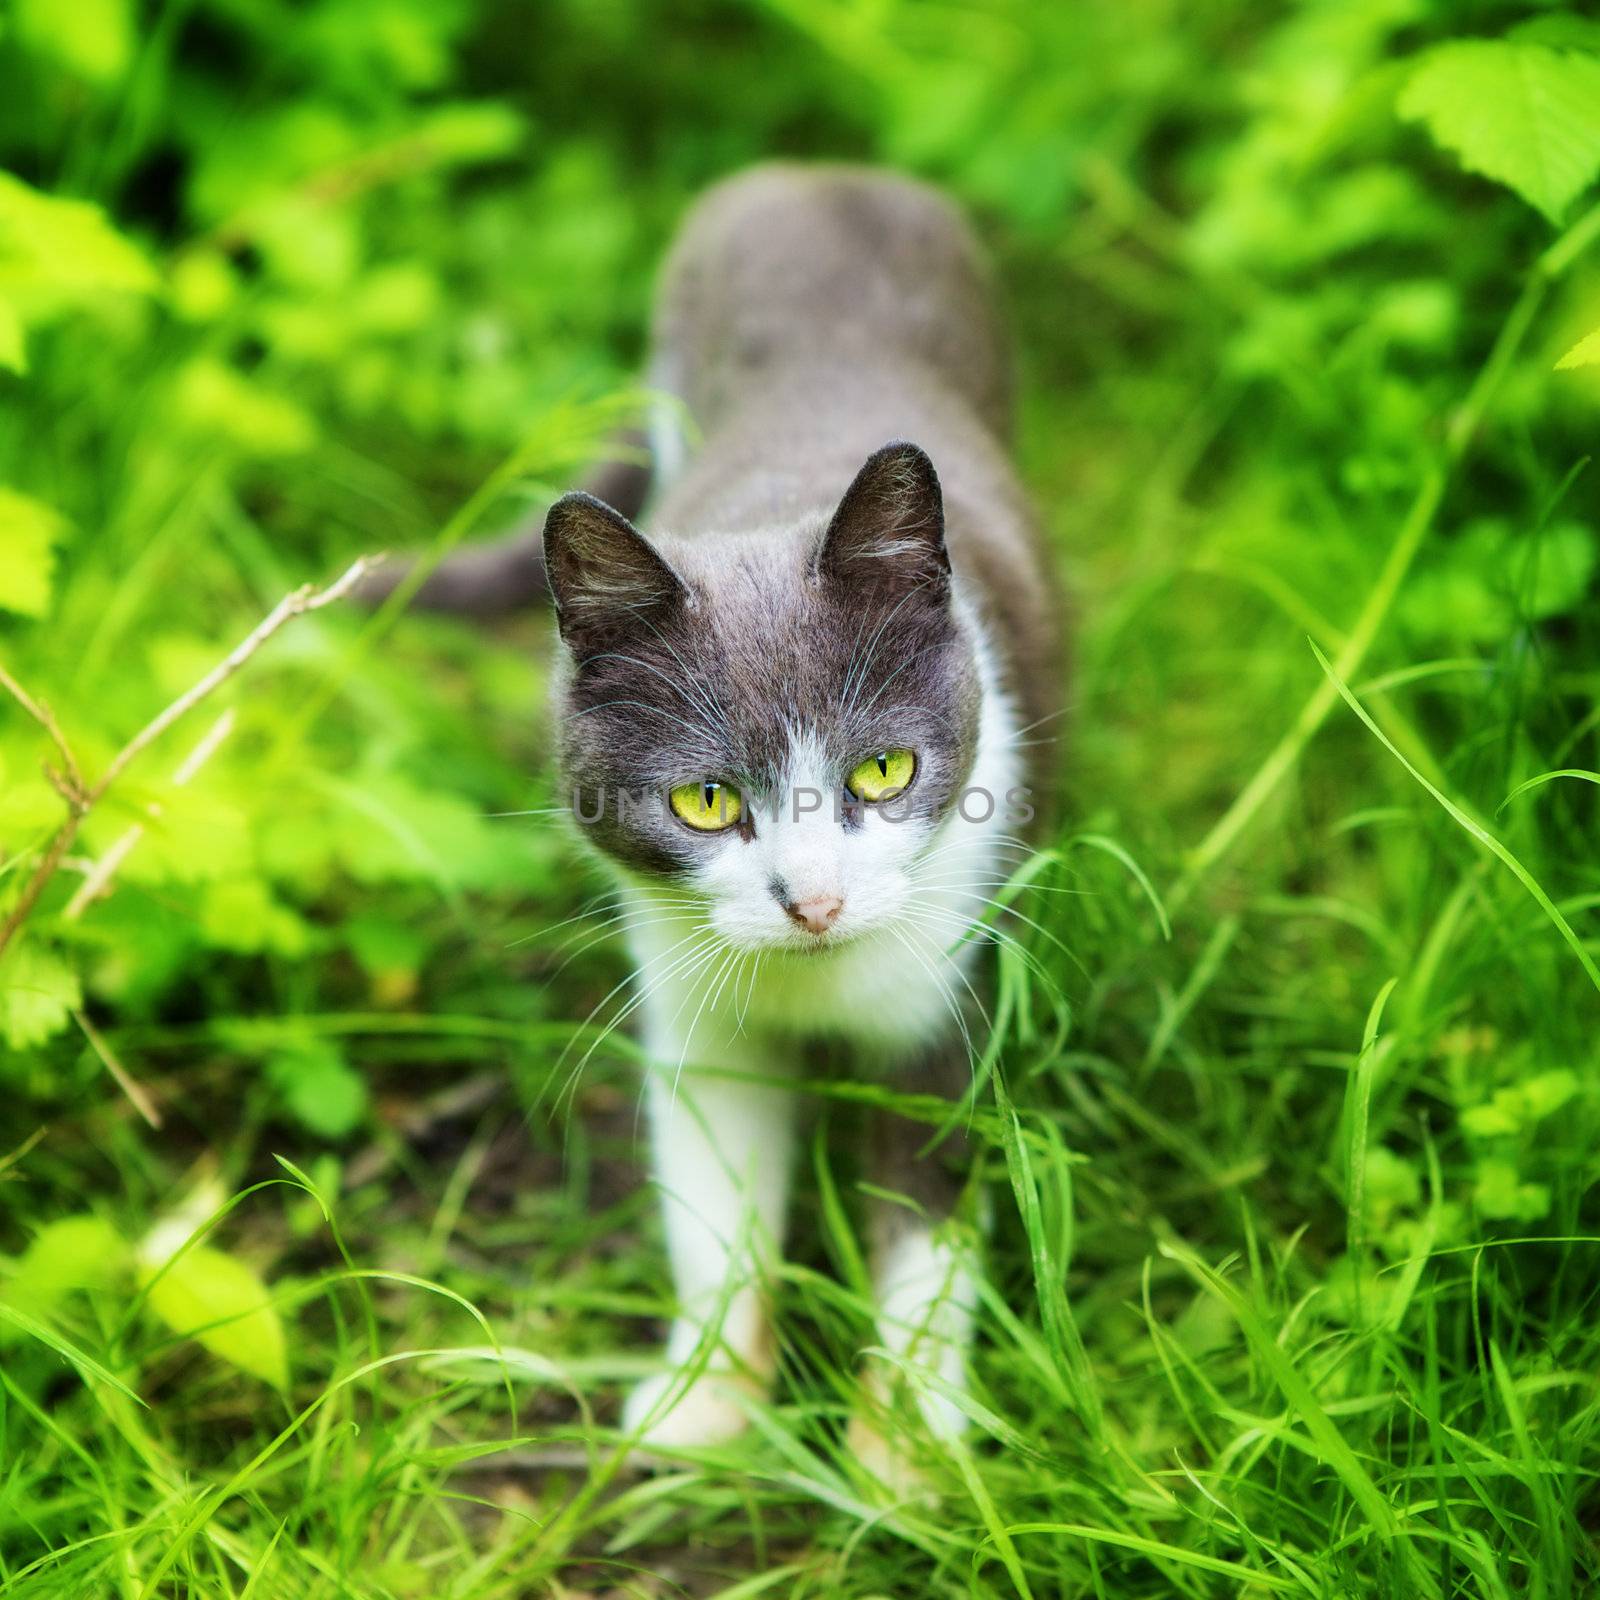 Cat in Grass by petr_malyshev